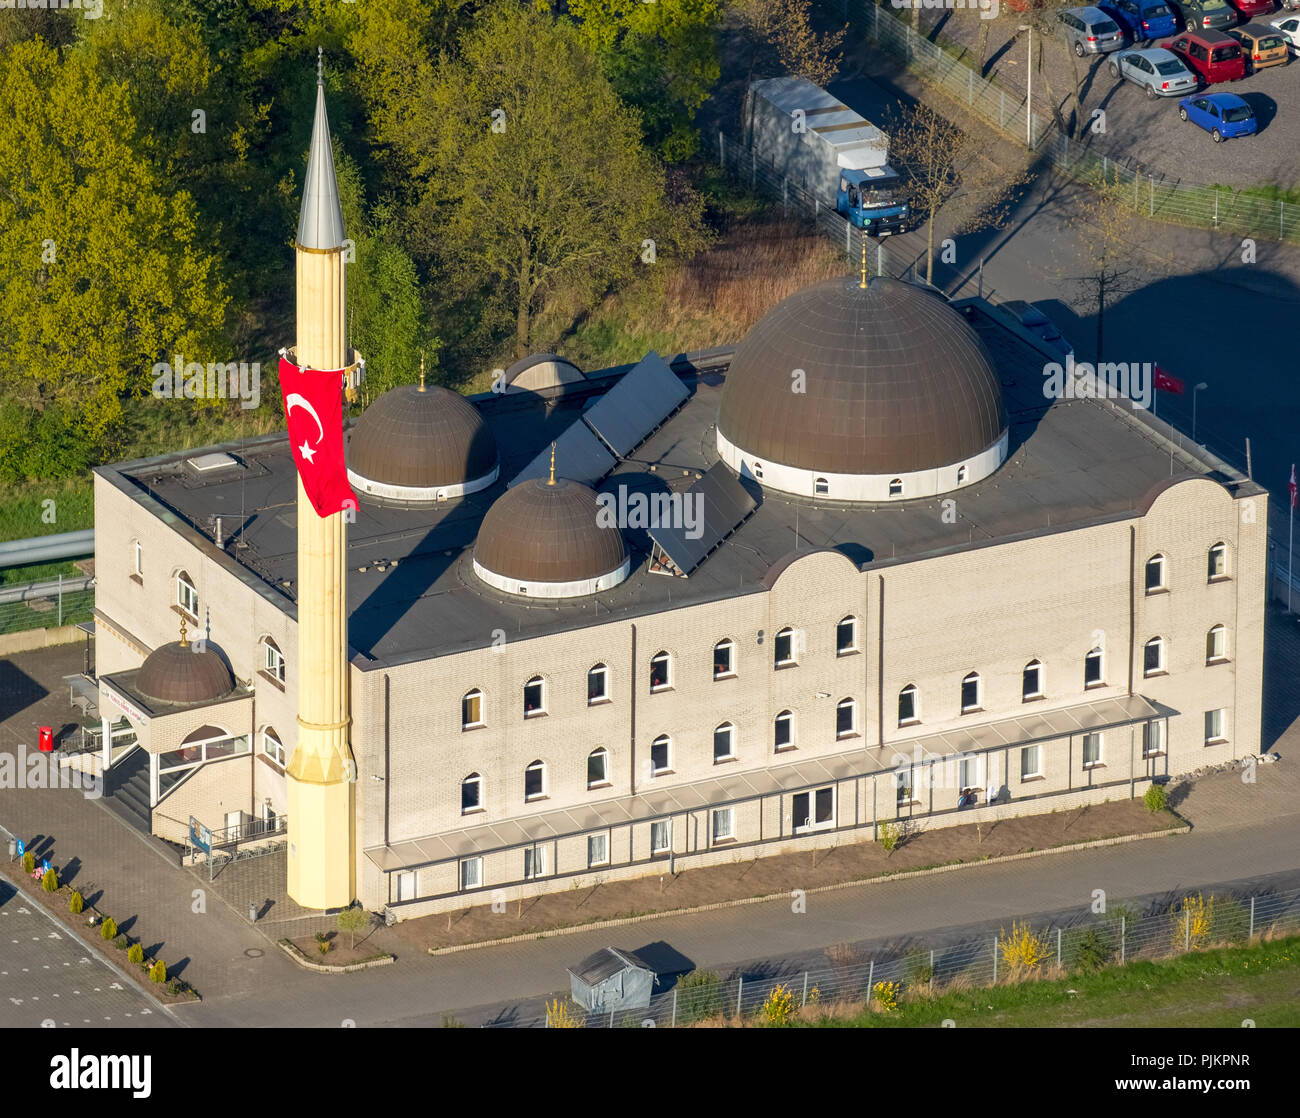 Mosque Heessen, Yunis Emre Camii Mosque, with Turkish flag at minaret, Hamm, Ruhr area, North Rhine-Westphalia, Germany Stock Photo